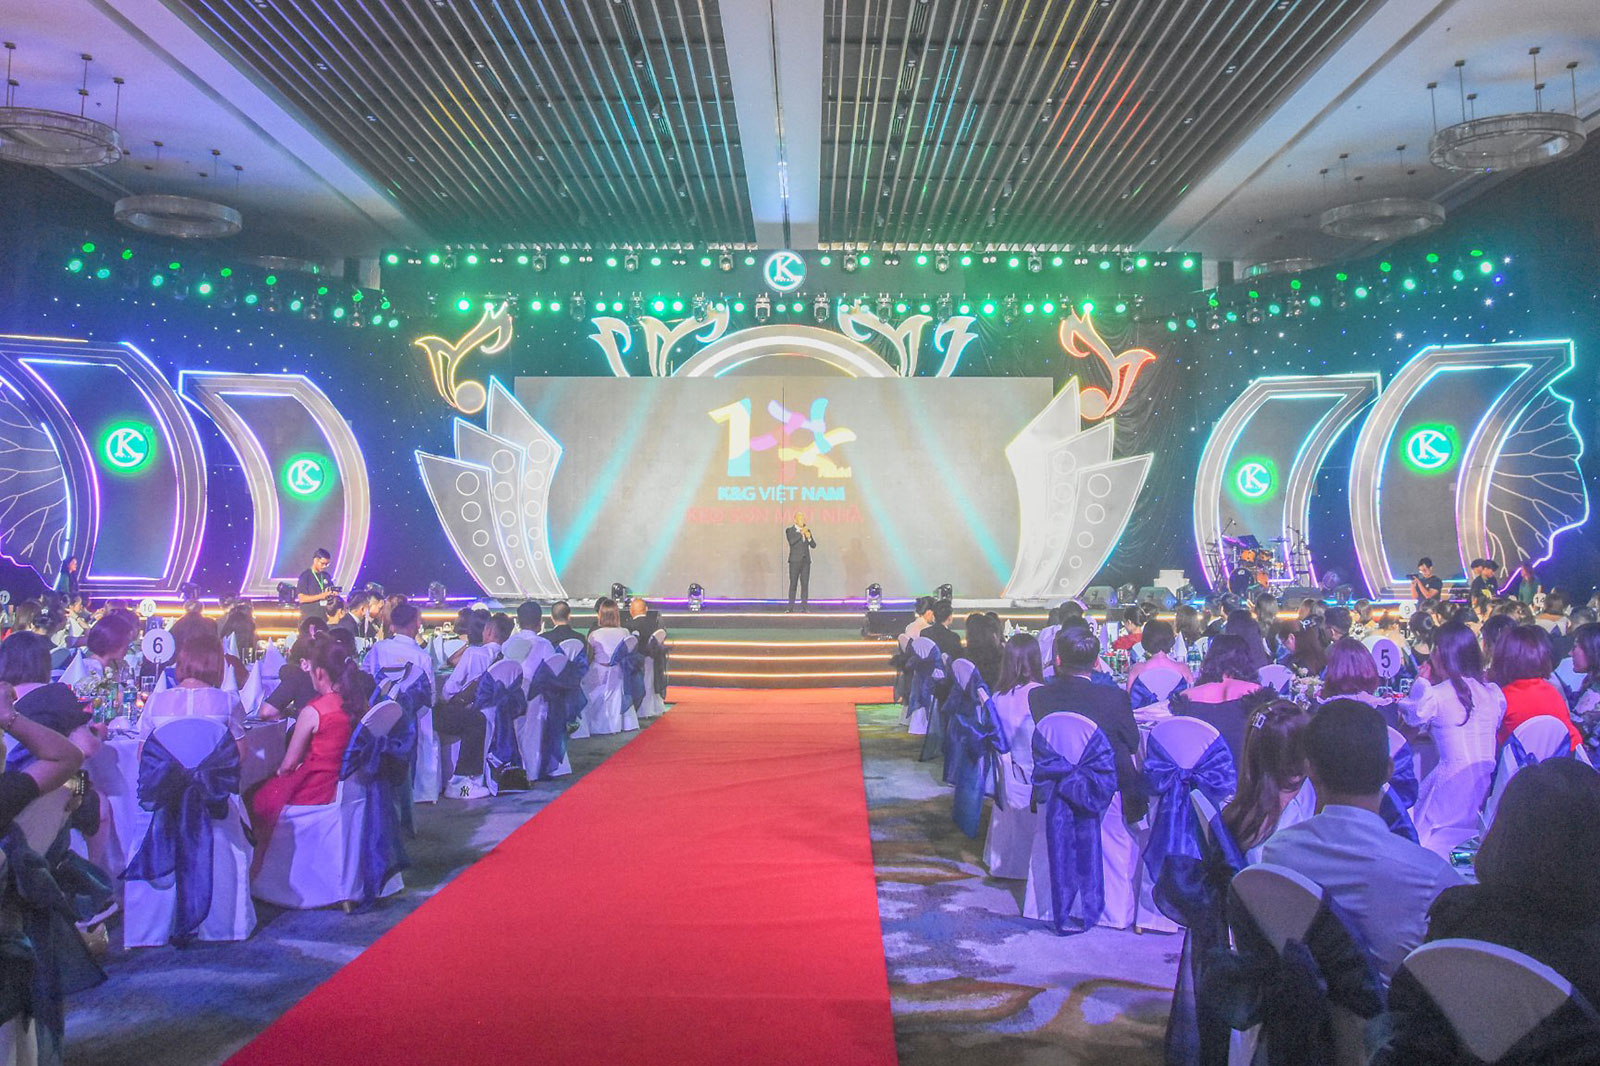 THE 10 YEAR ANNIVERSARY OF K&G VIETNAM AT ARIYANA CONVENTION CENTRE DANANG